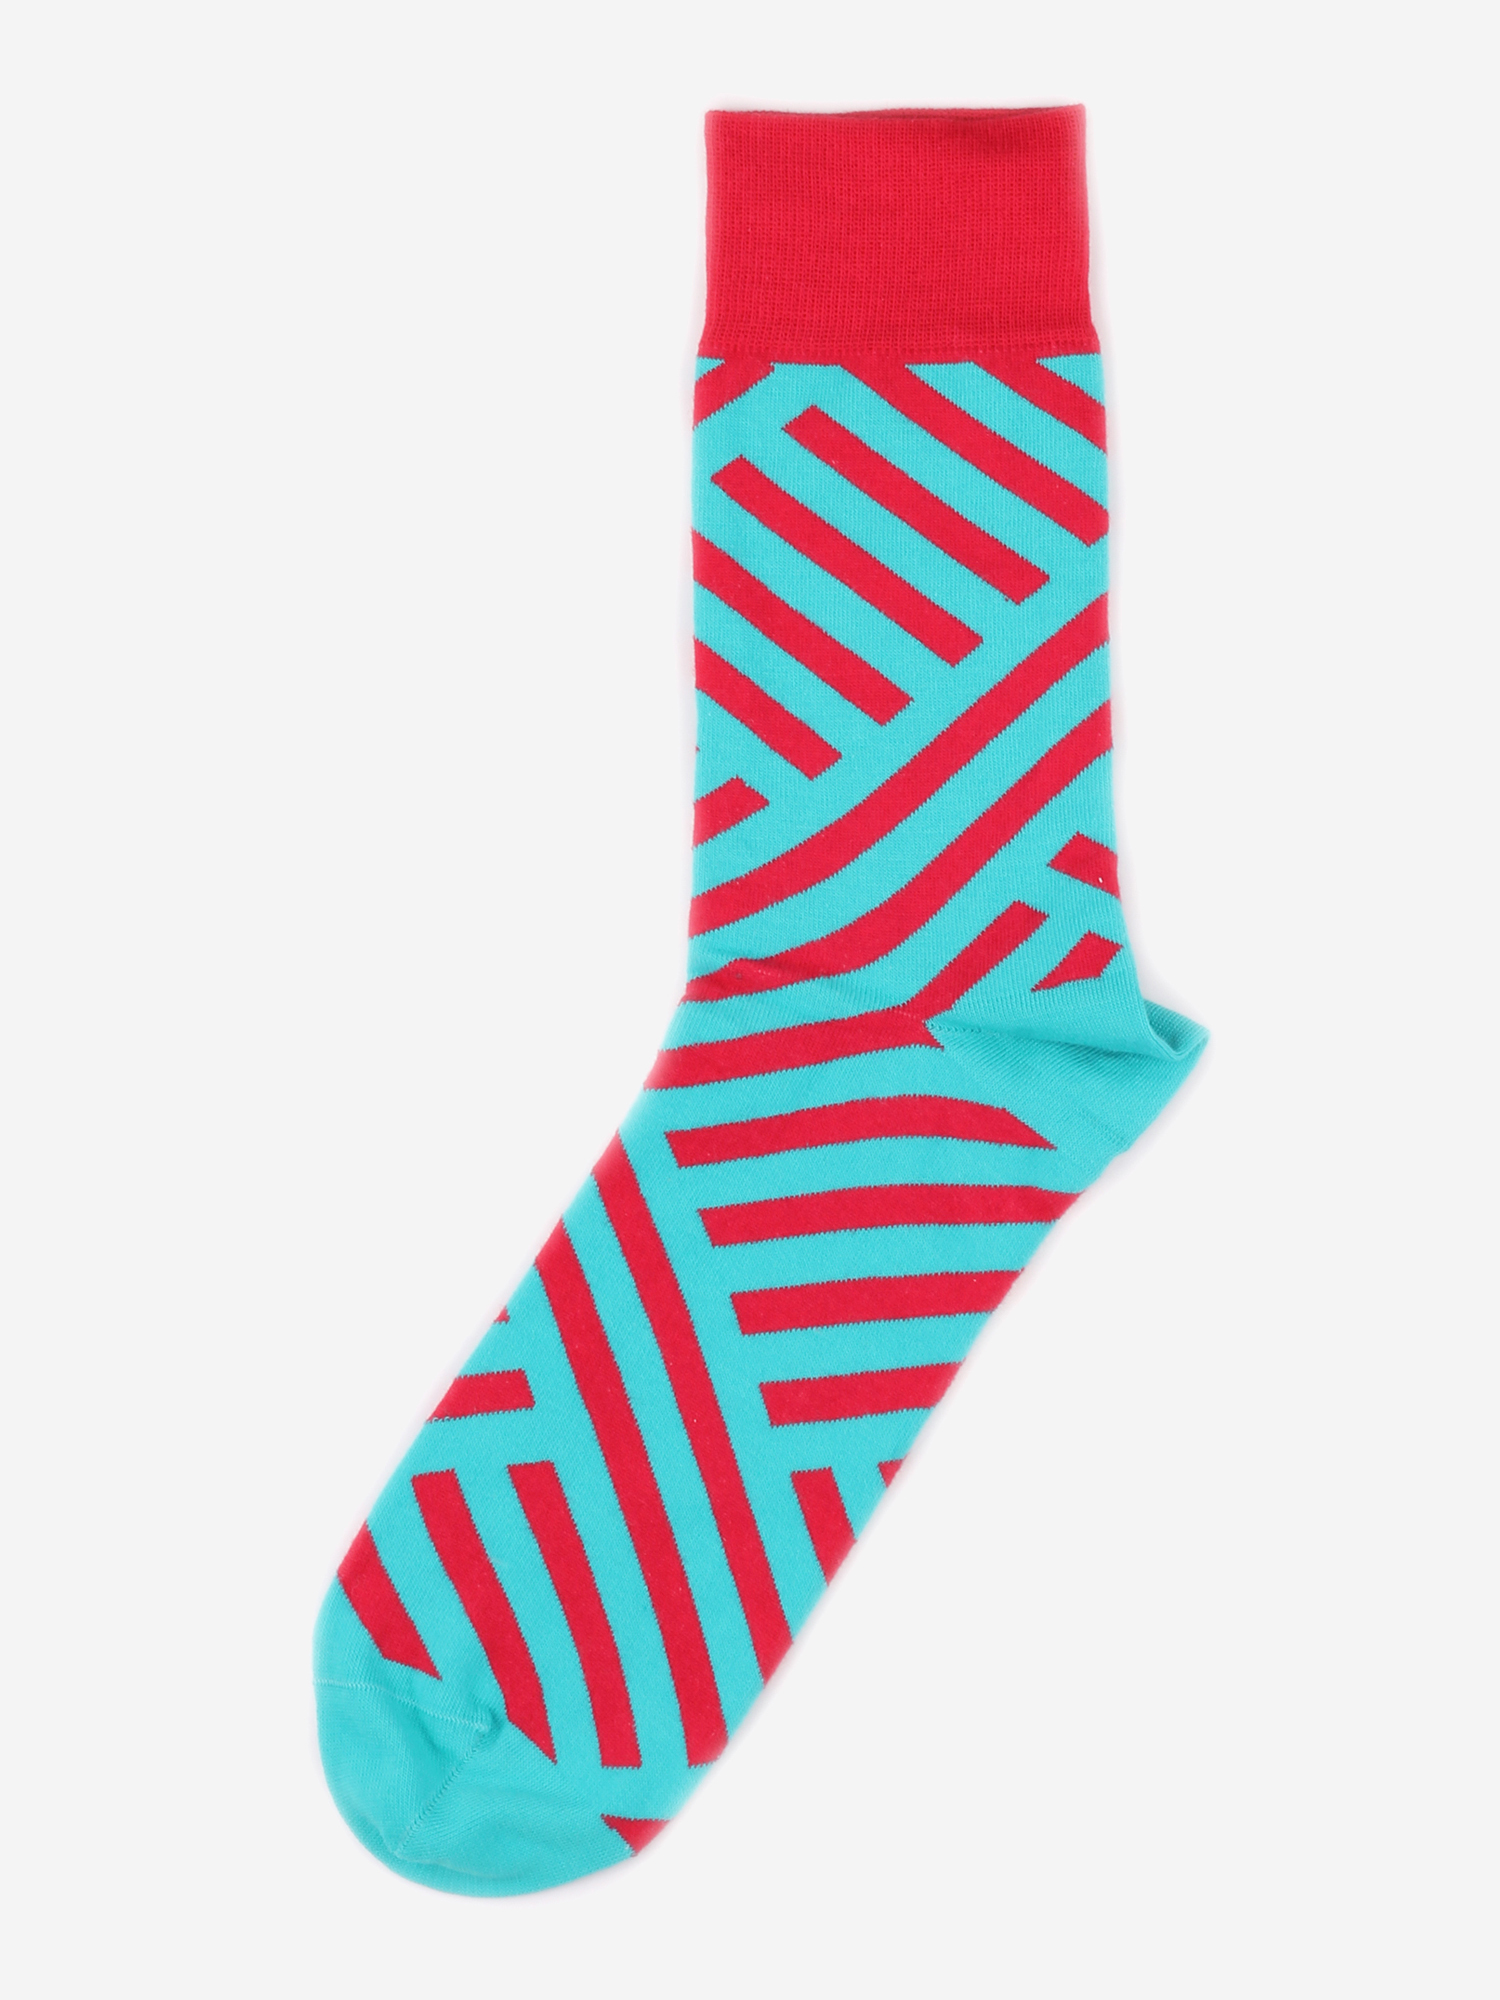 Дизайнерские носки Burning Heels - Diagonal Stripes - Red/Blue, Синий